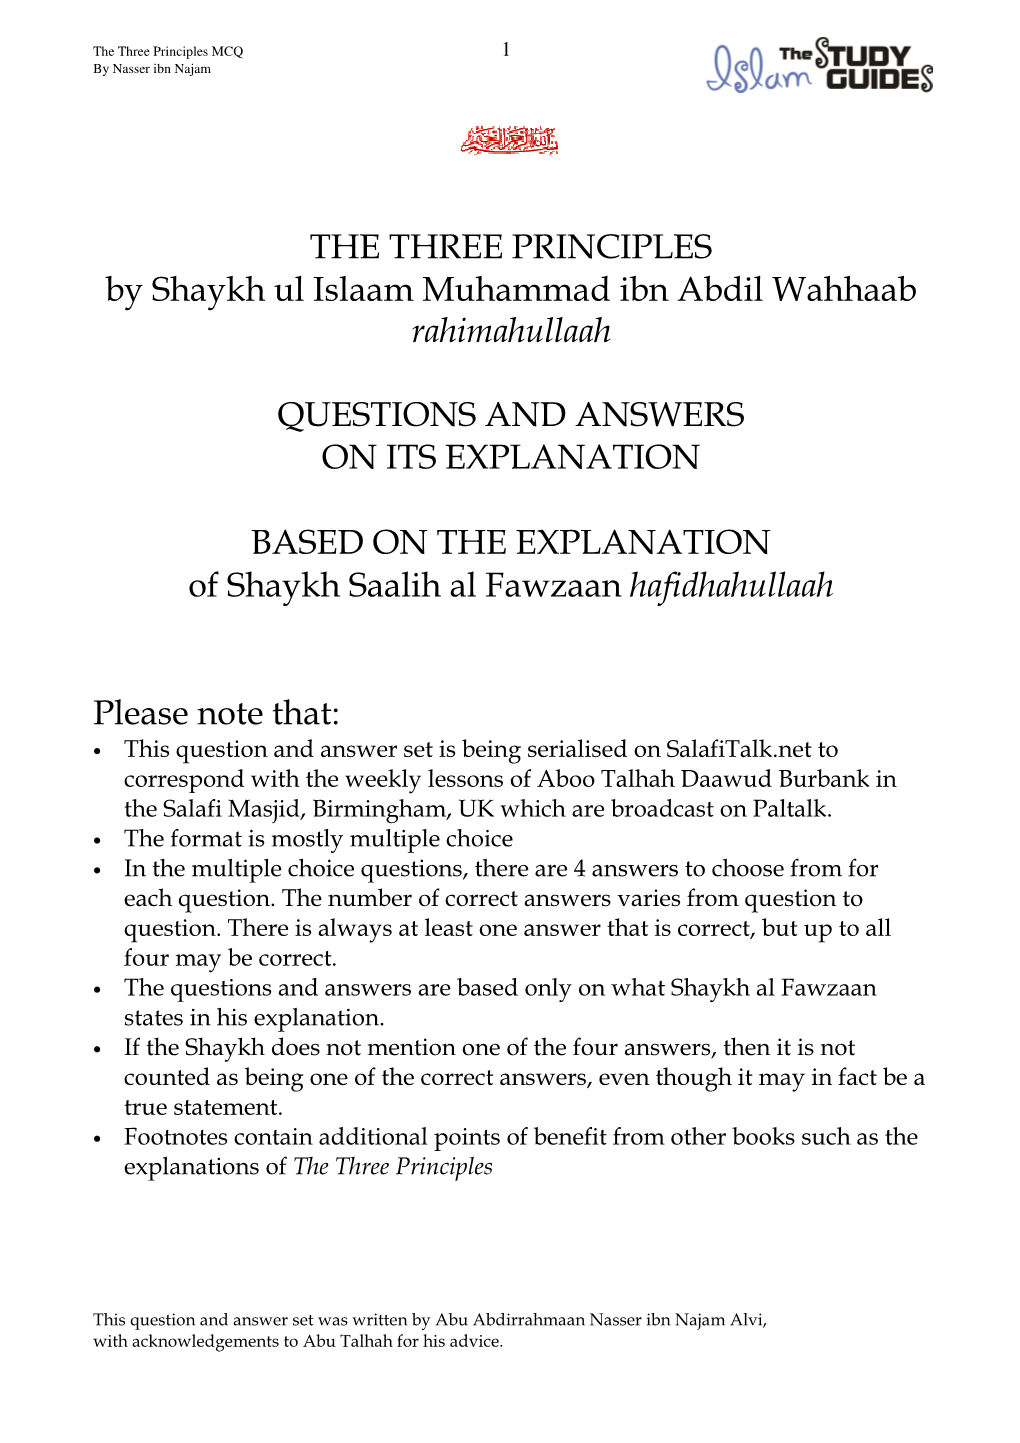 THE THREE PRINCIPLES by Shaykh Ul Islaam Muhammad Ibn Abdil Wahhaab Rahimahullaah